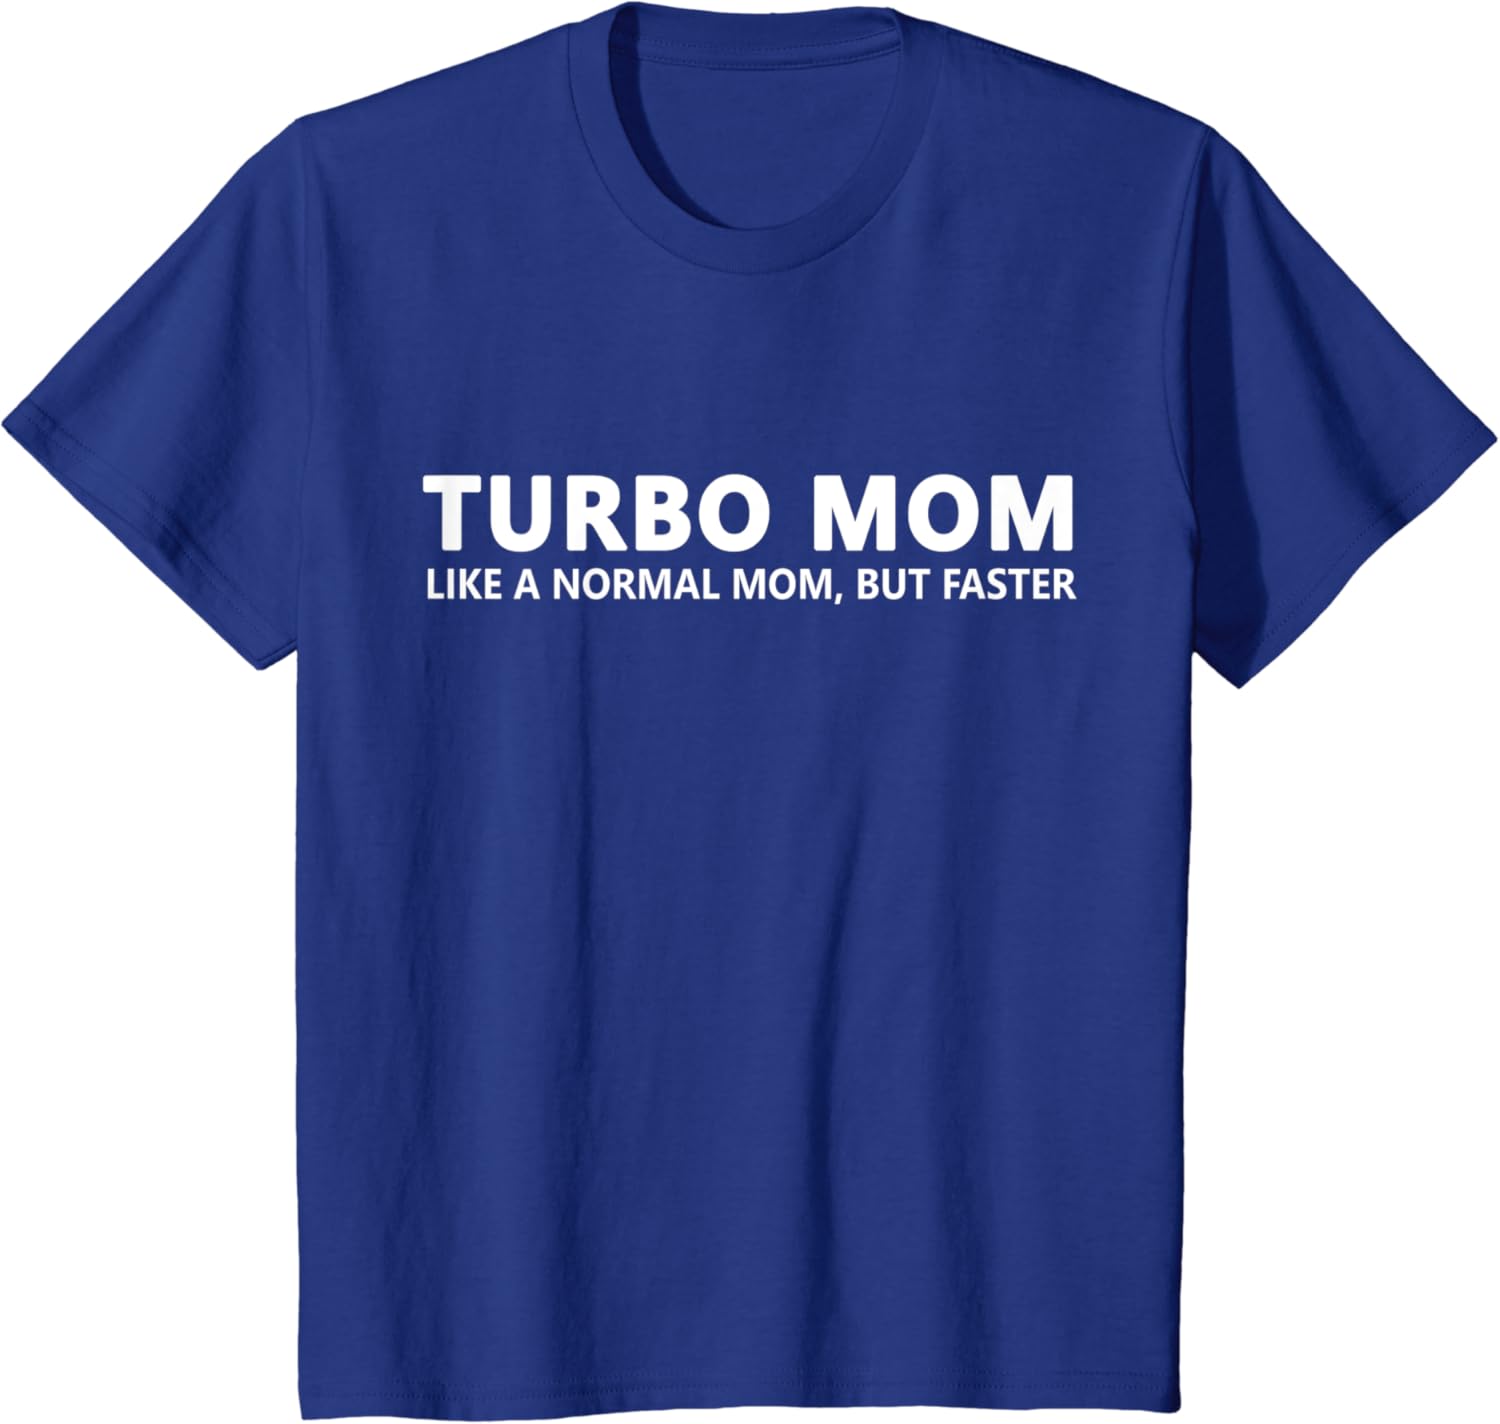 abdul nabi recommends turbo moms com pic